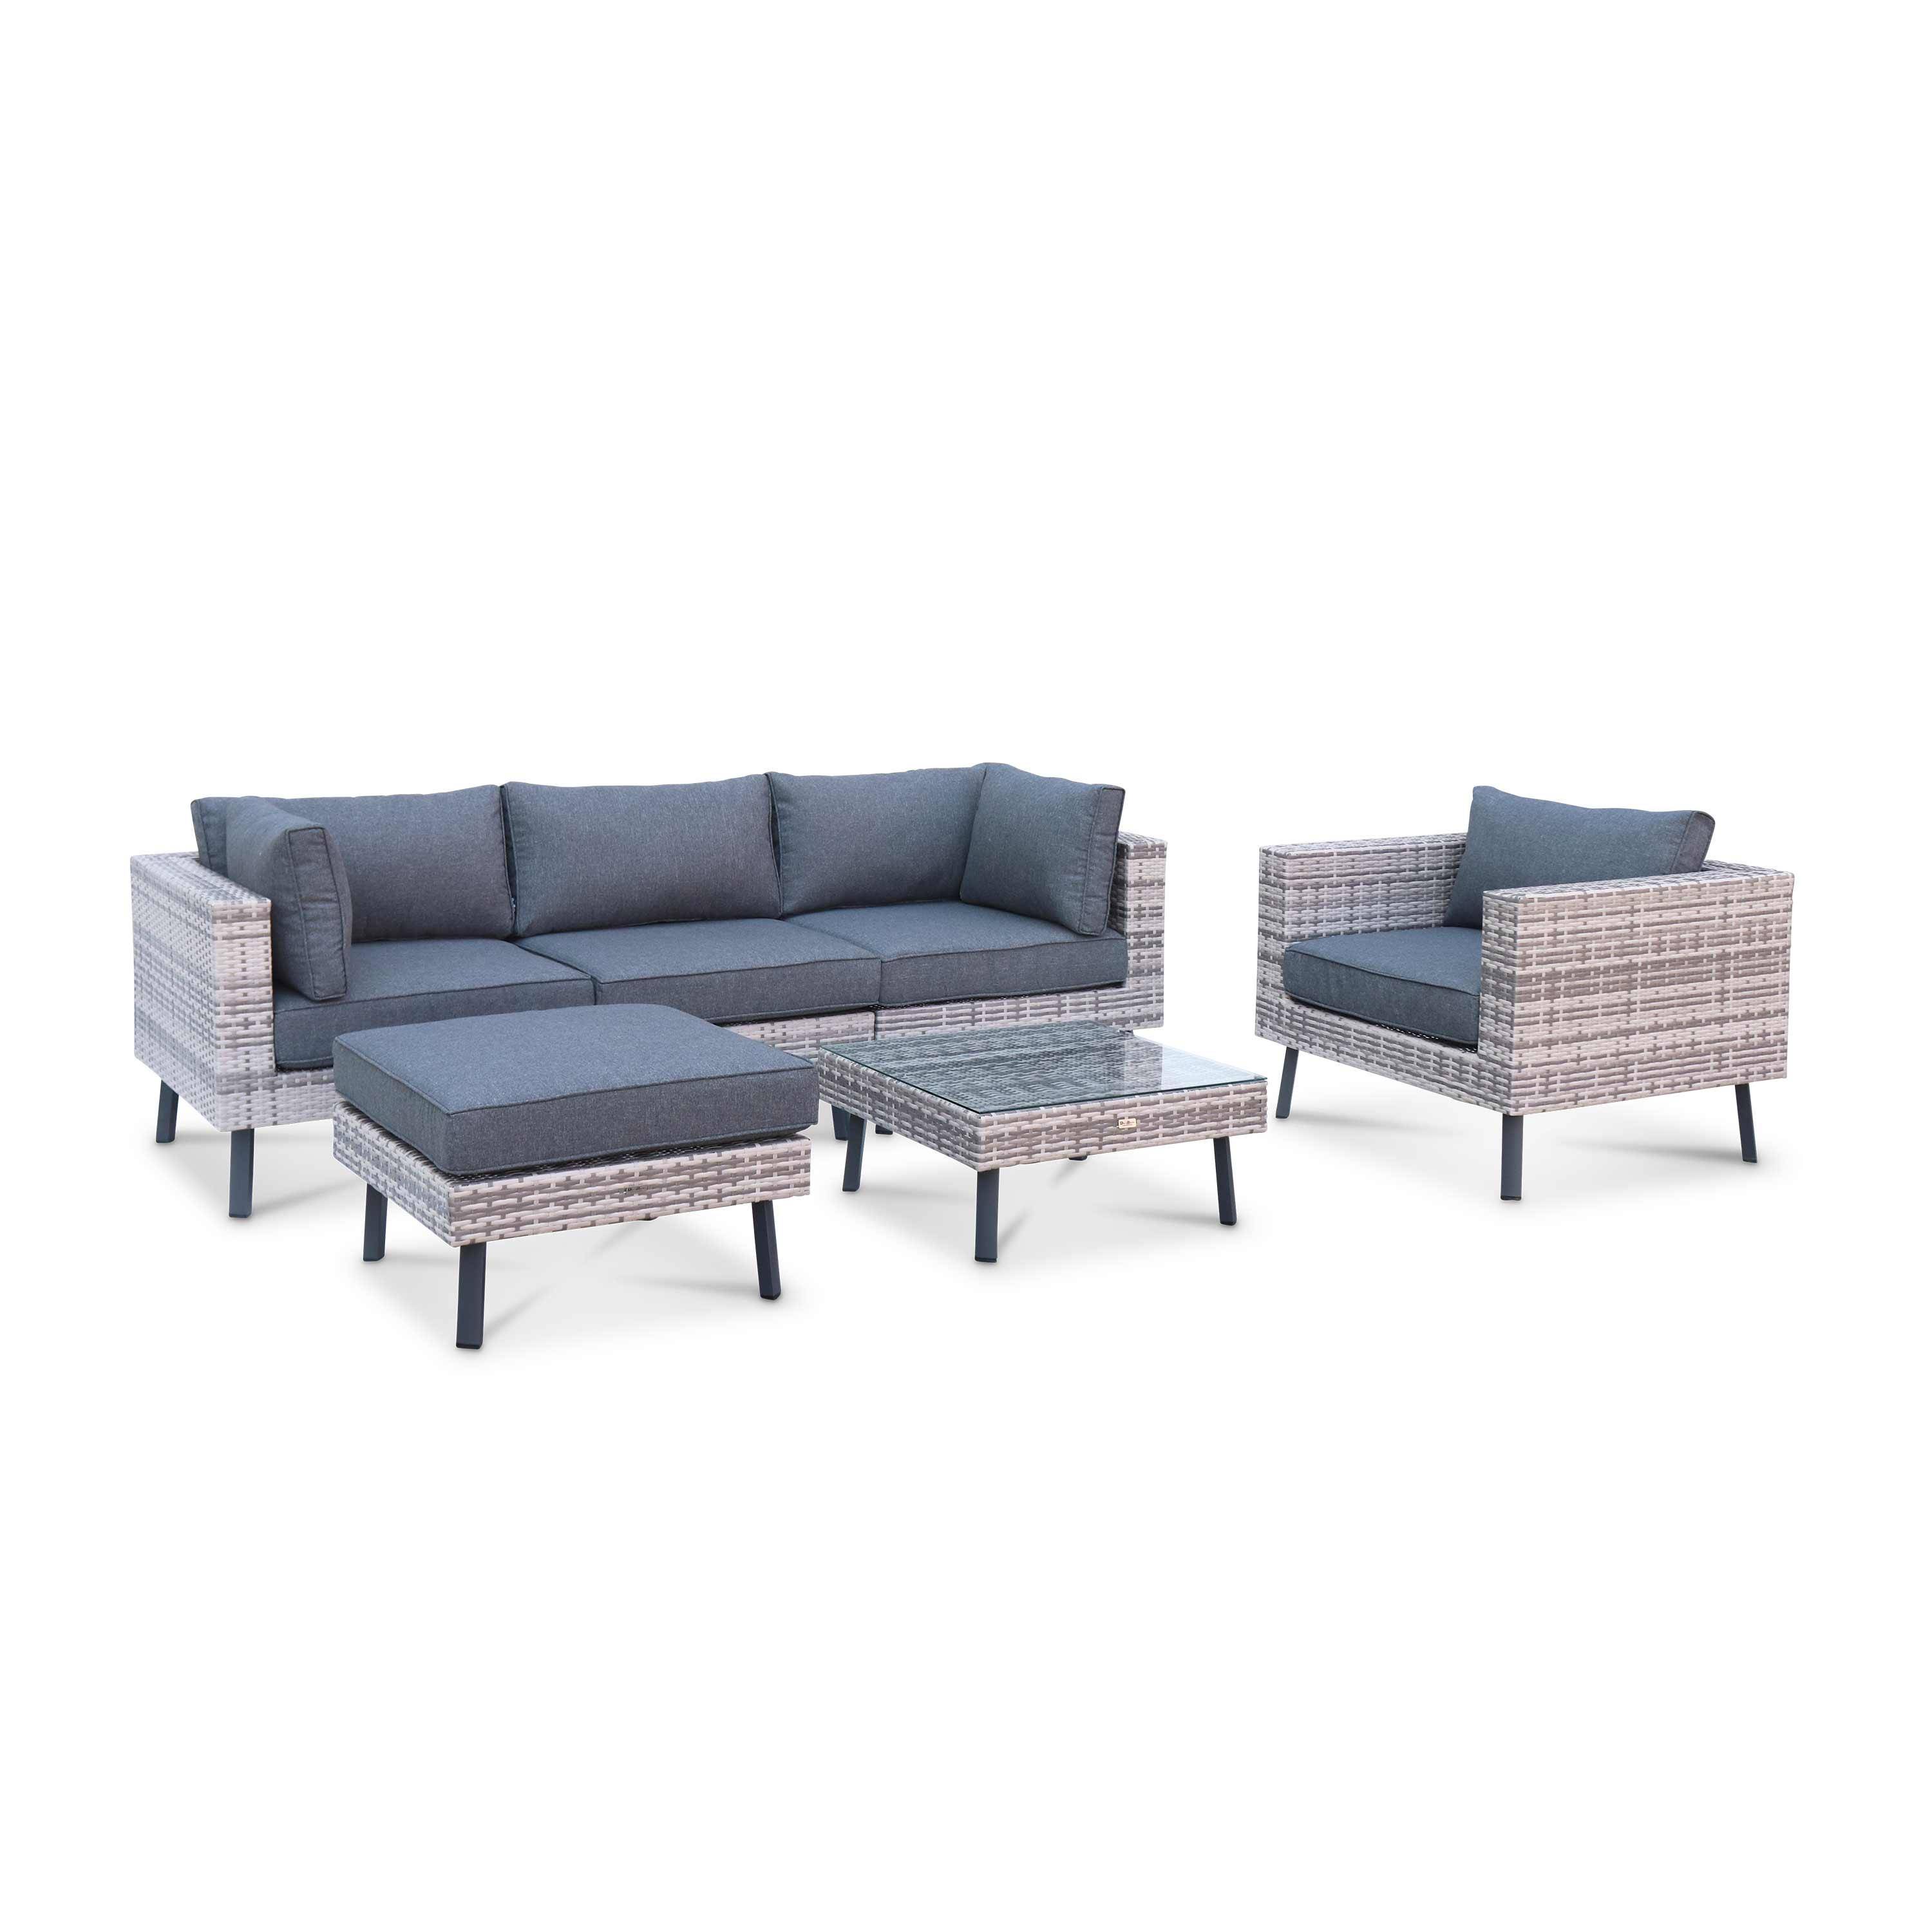 5-seater elevated polyrattan garden sofa set with stylish legs - sofa, 2 armchairs, footrest, coffee table - Alba - Mixed Grey rattan, Charcoal Grey cushions ,sweeek,Photo1